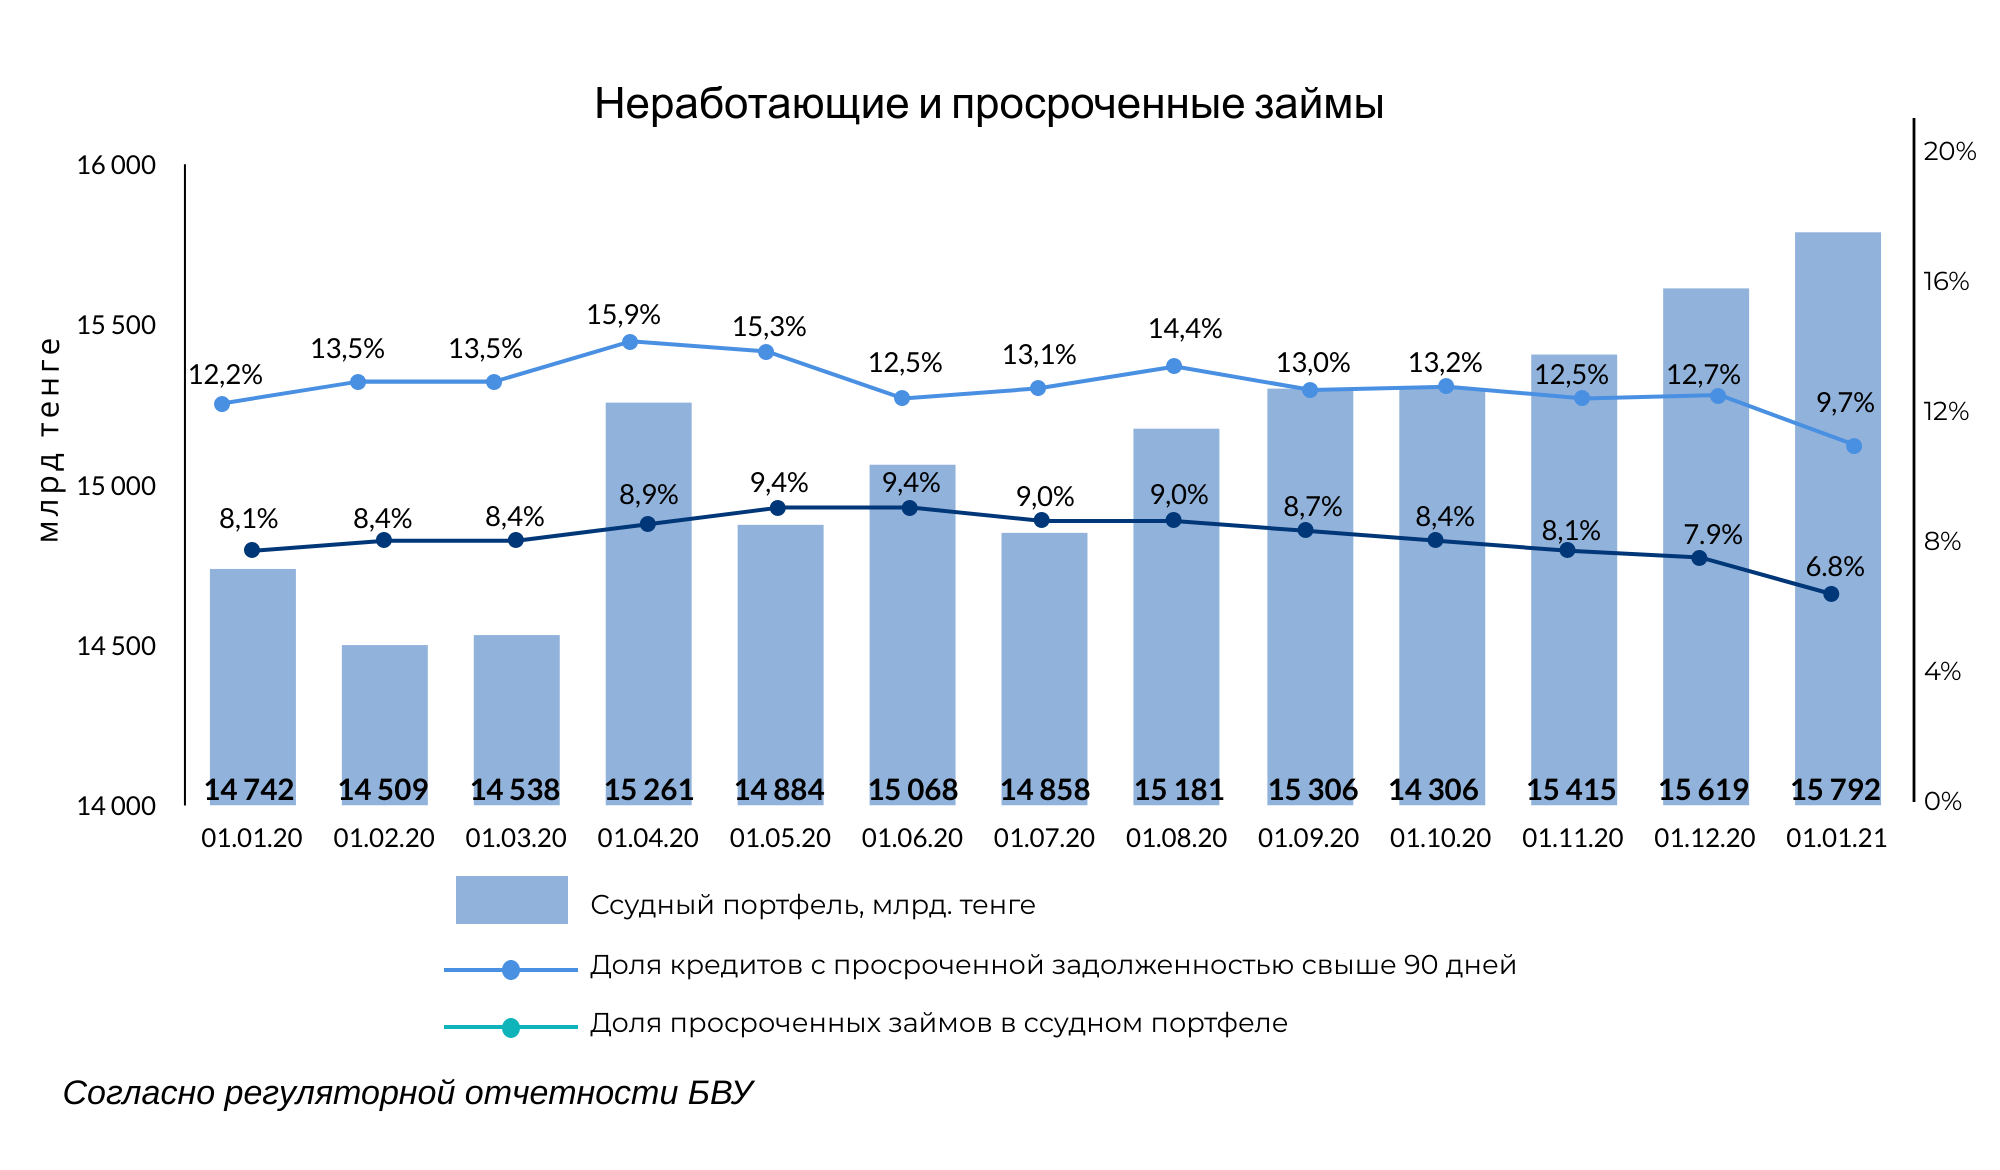 Банки Казахстана продолжают наращивать запасы ликвидности 591104 - Kapital.kz 